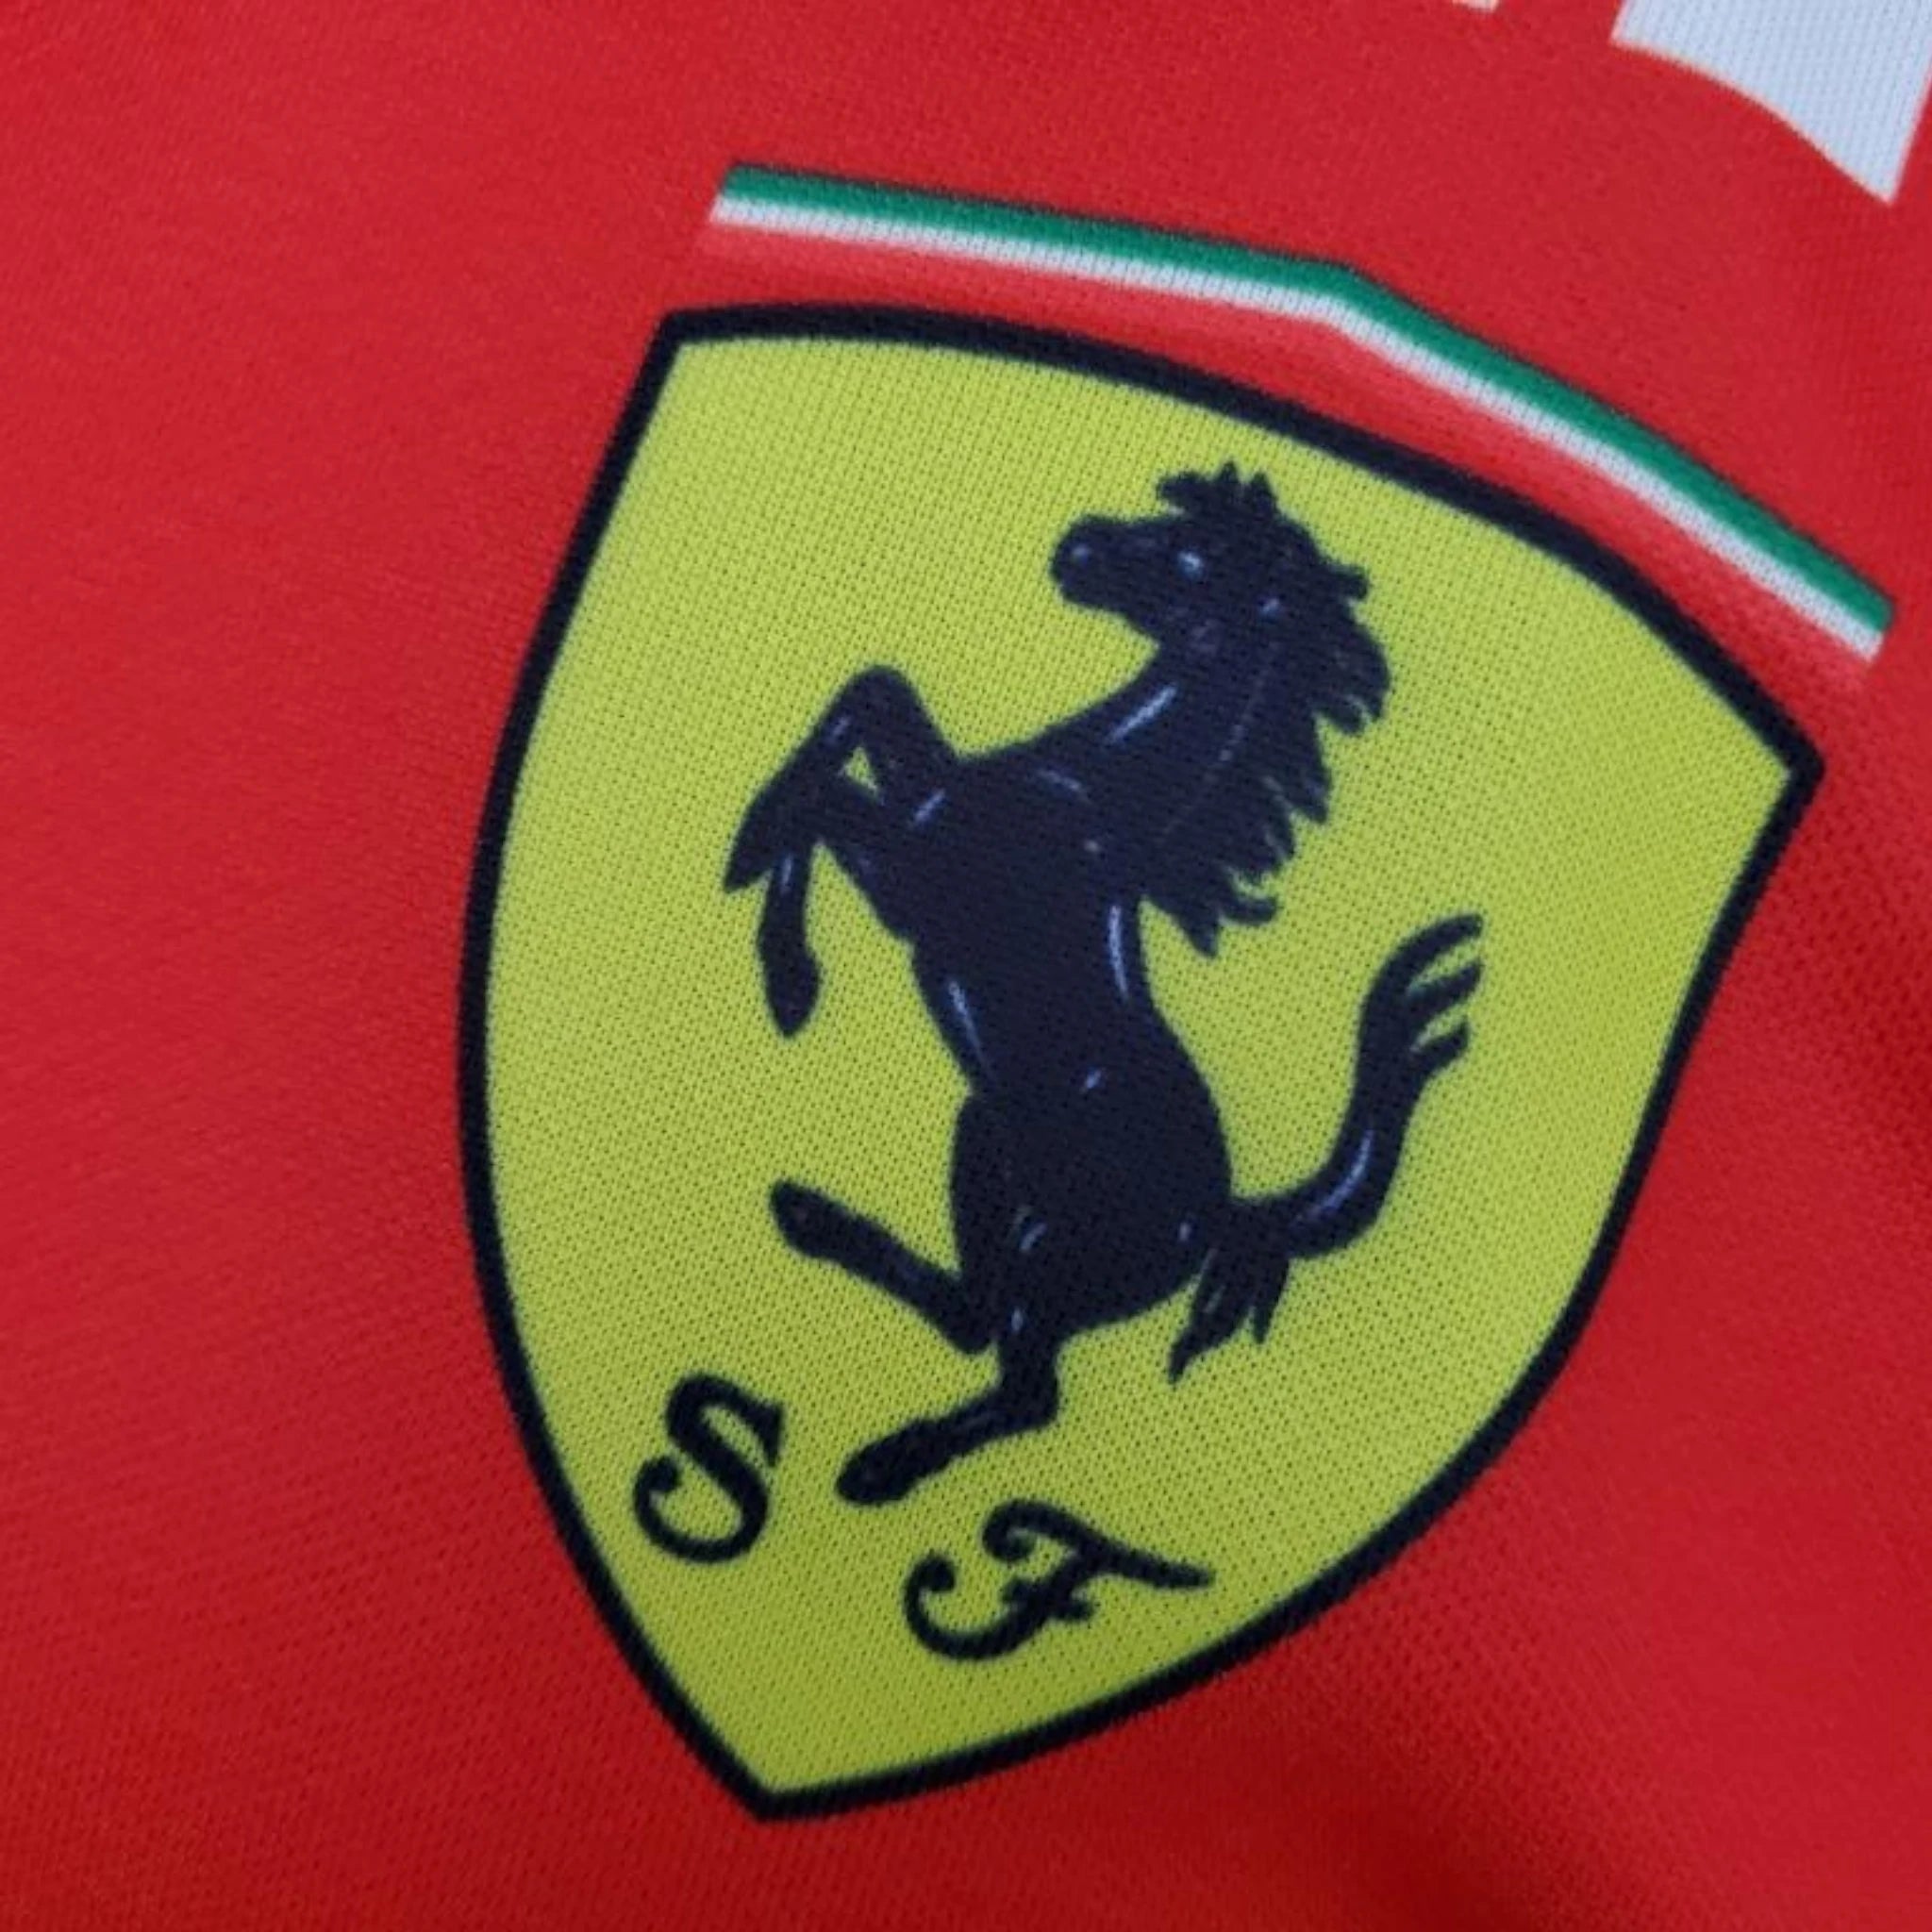 2021 Ferrari Formula One Racing Polo Zipper Shirt